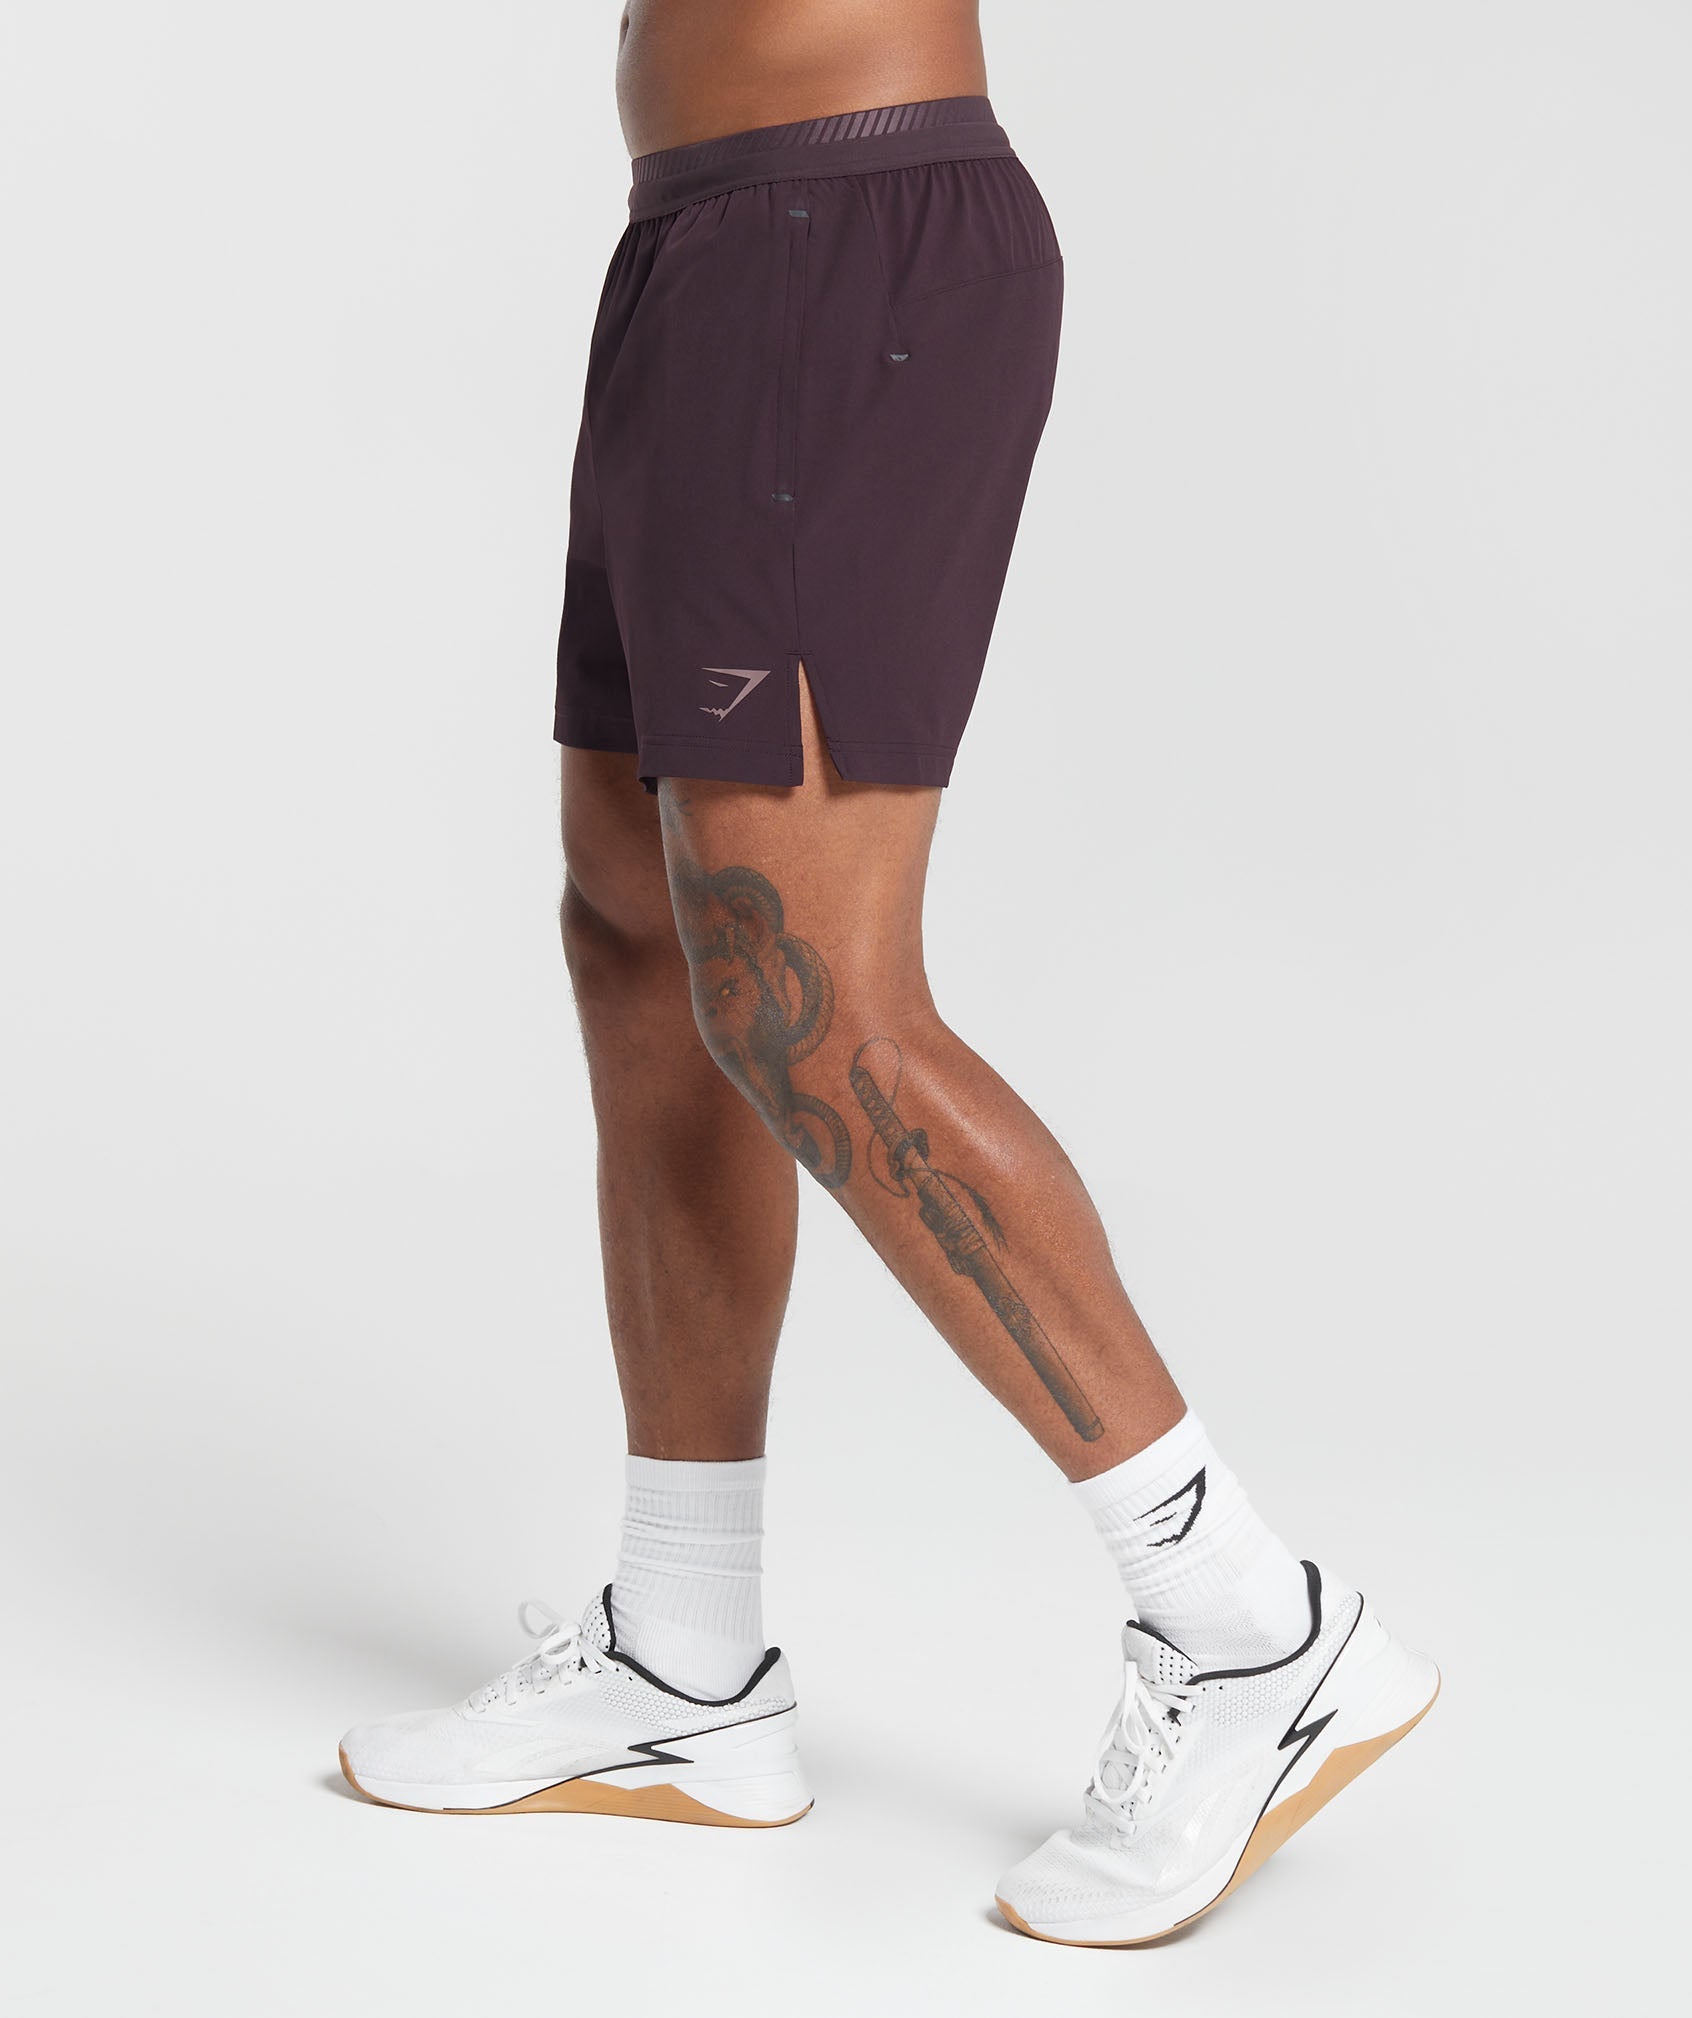 Apex 5" Hybrid Shorts in Plum Brown - view 3